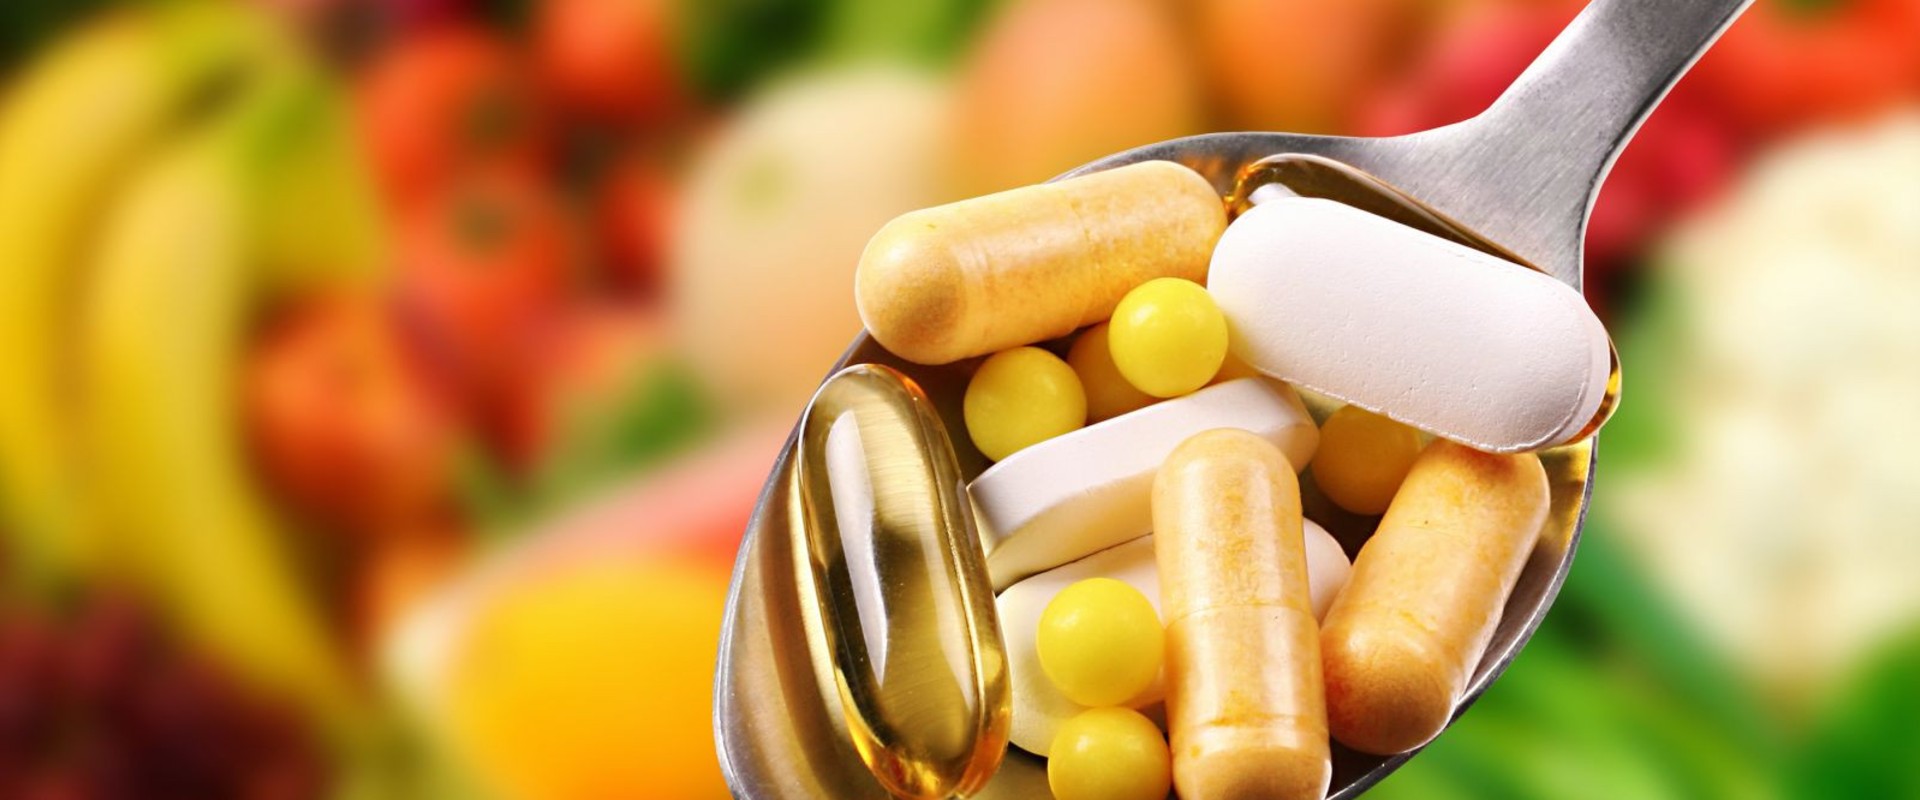 Does fda regulate vitamin supplements?